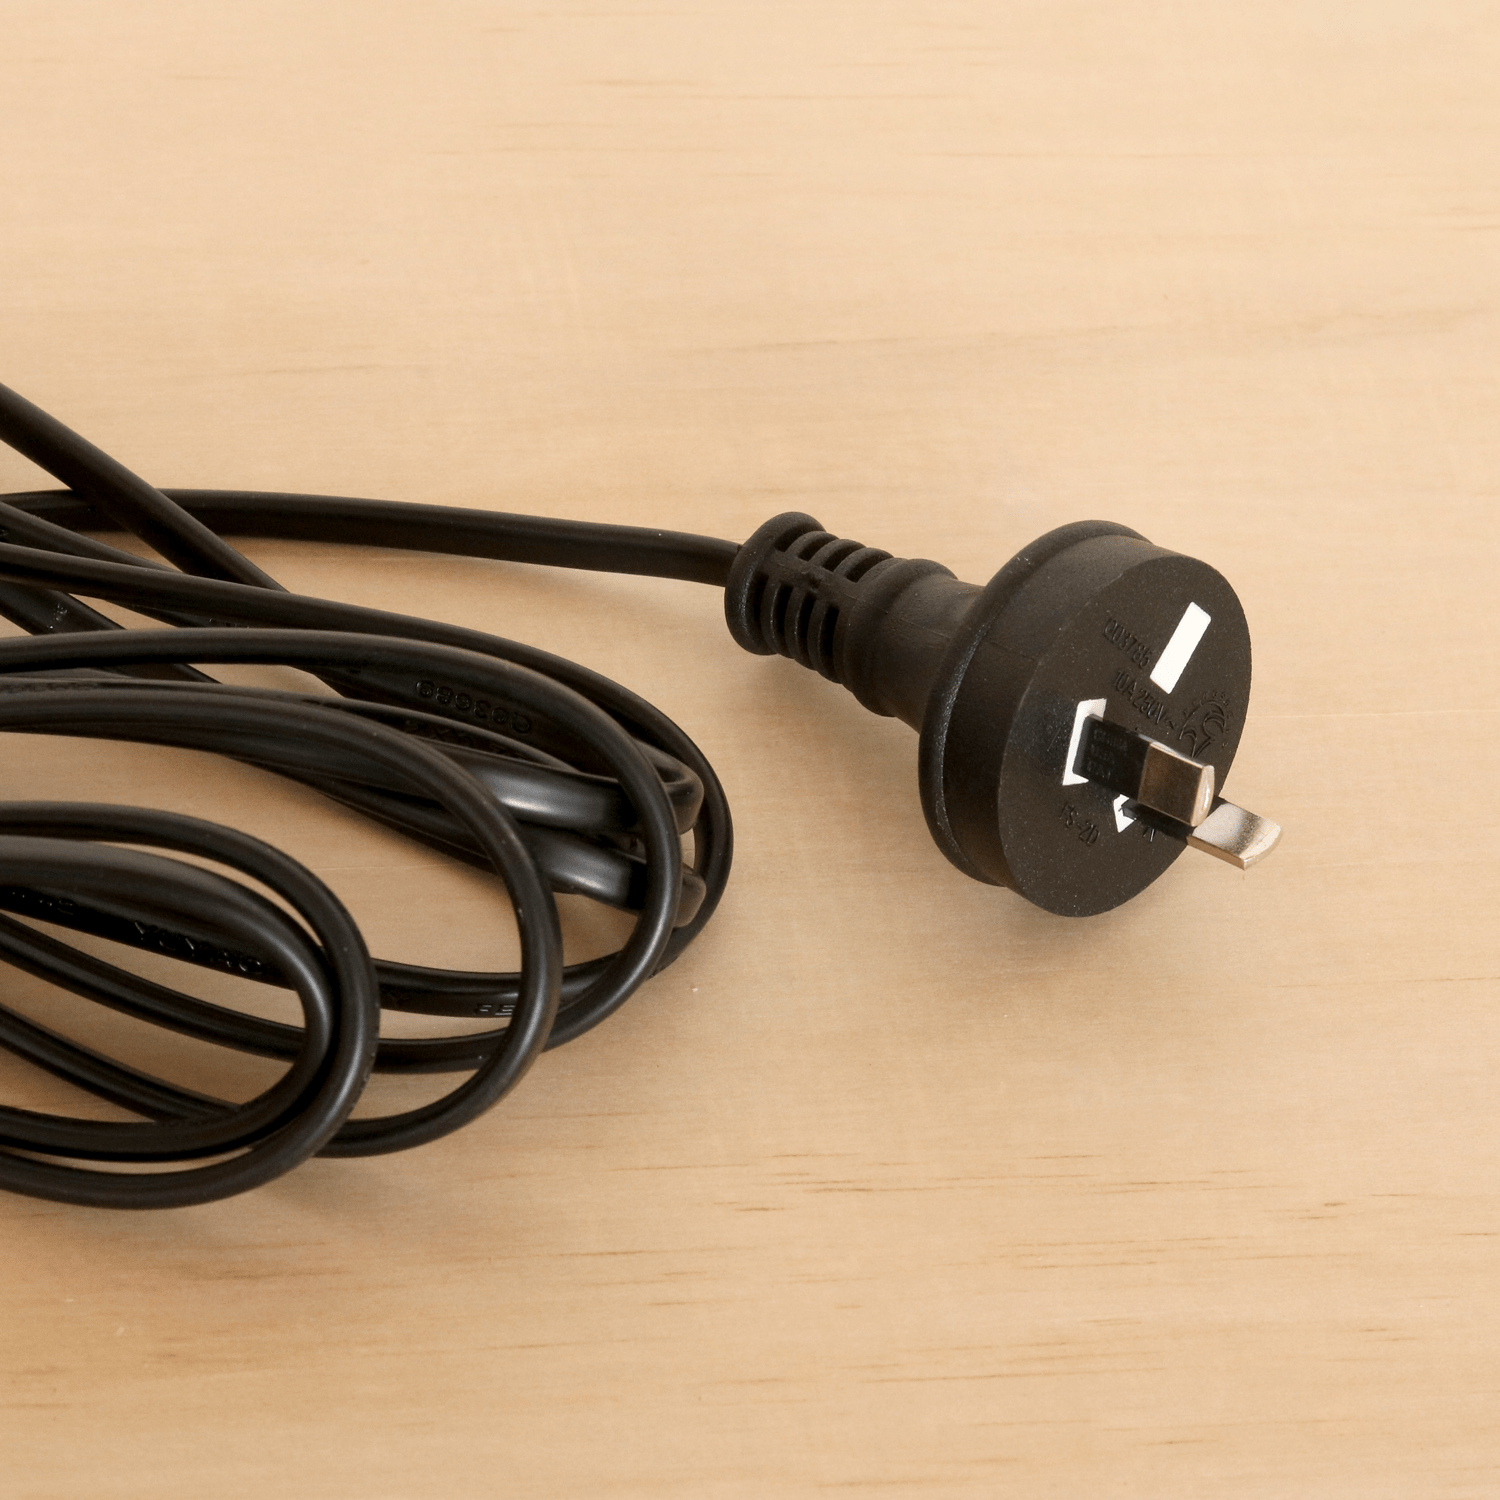 A black electrical cord